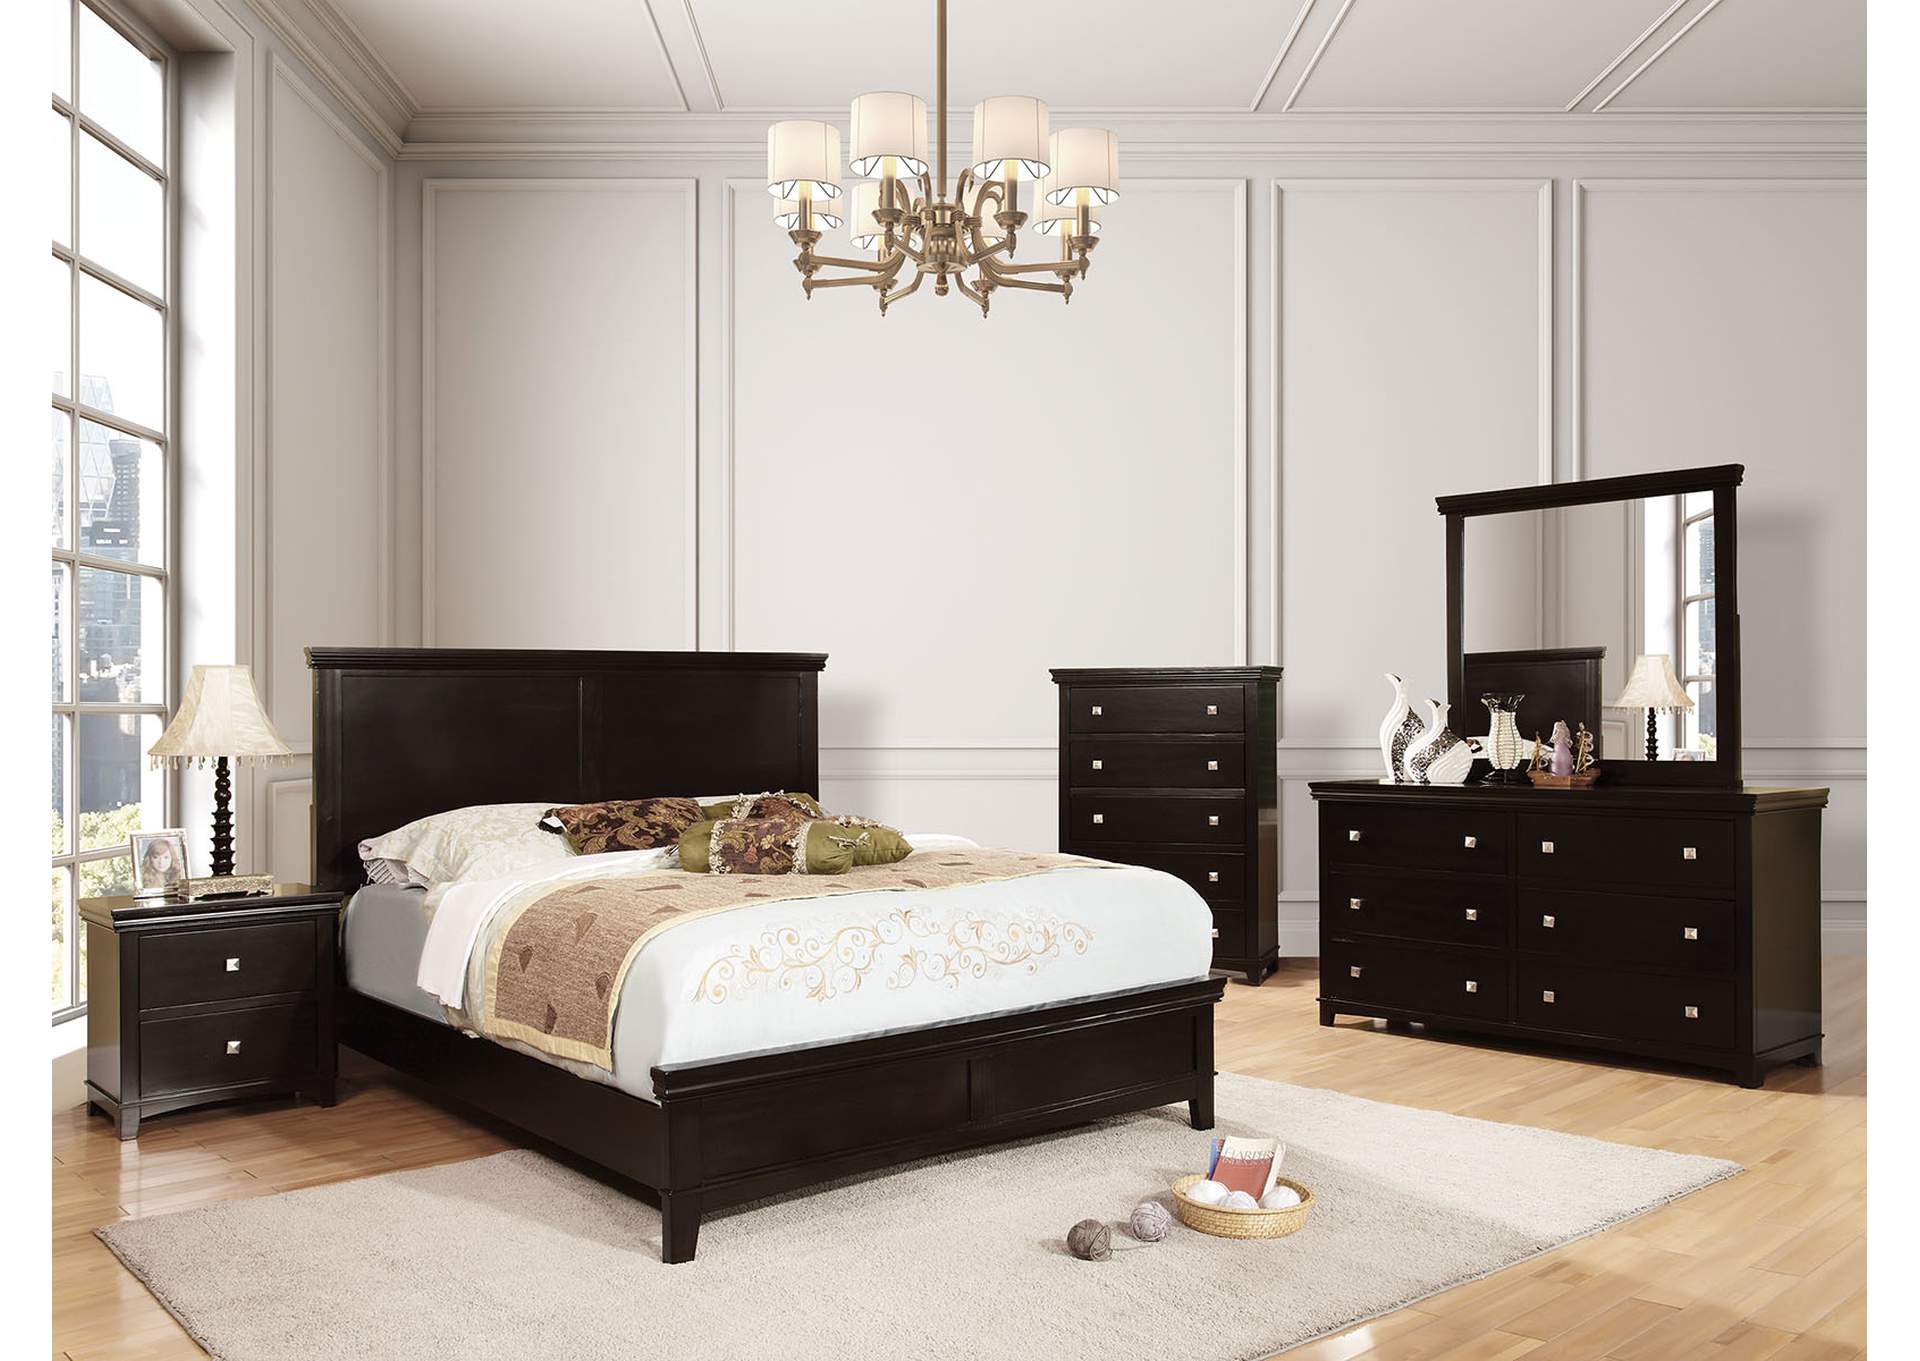 Spruce Espresso Full Bed w/Dresser and Mirror,Furniture of America